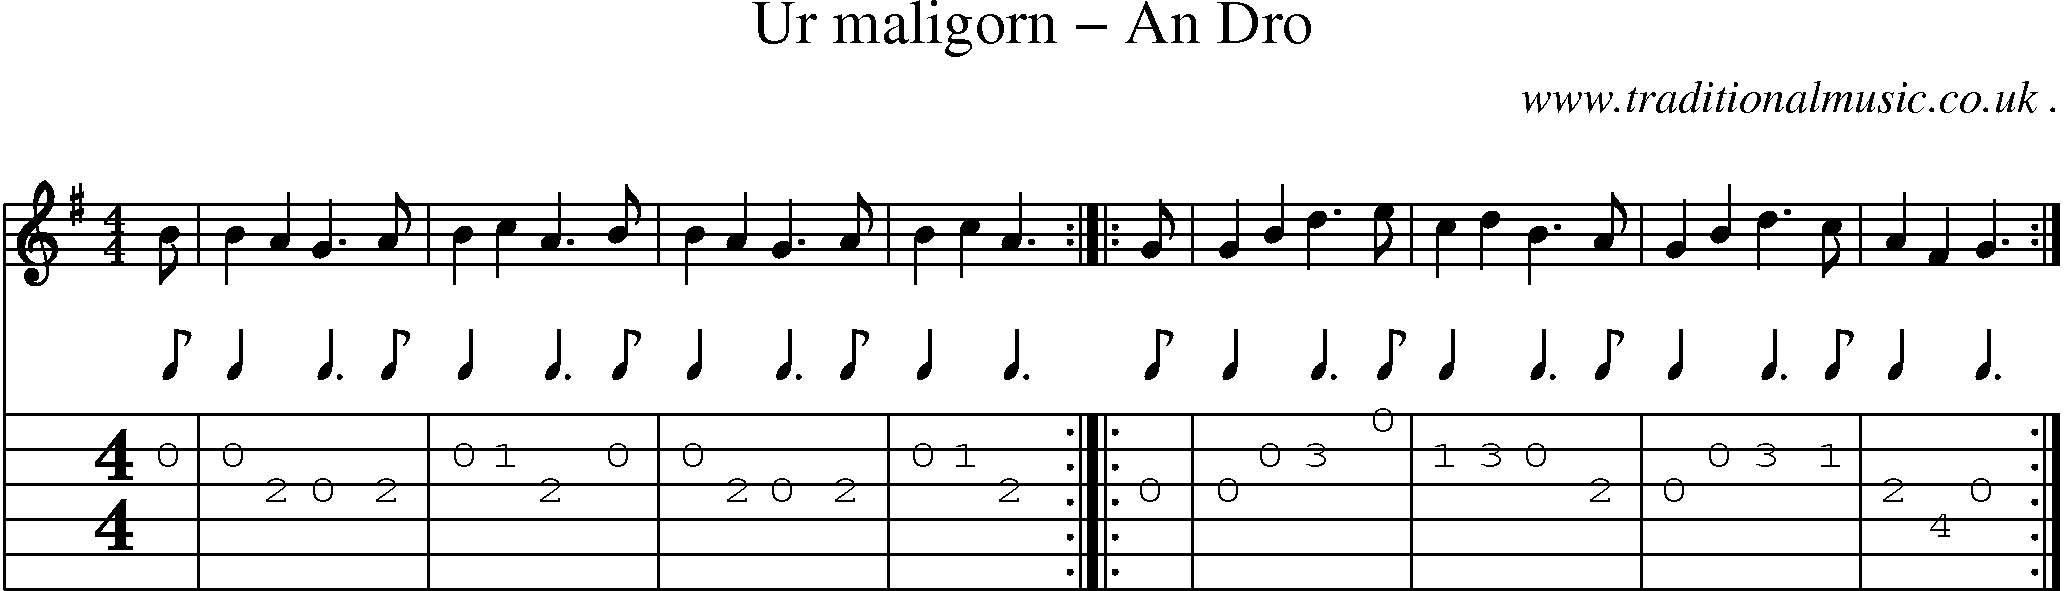 Sheet-Music and Guitar Tabs for Ur Maligorn An Dro